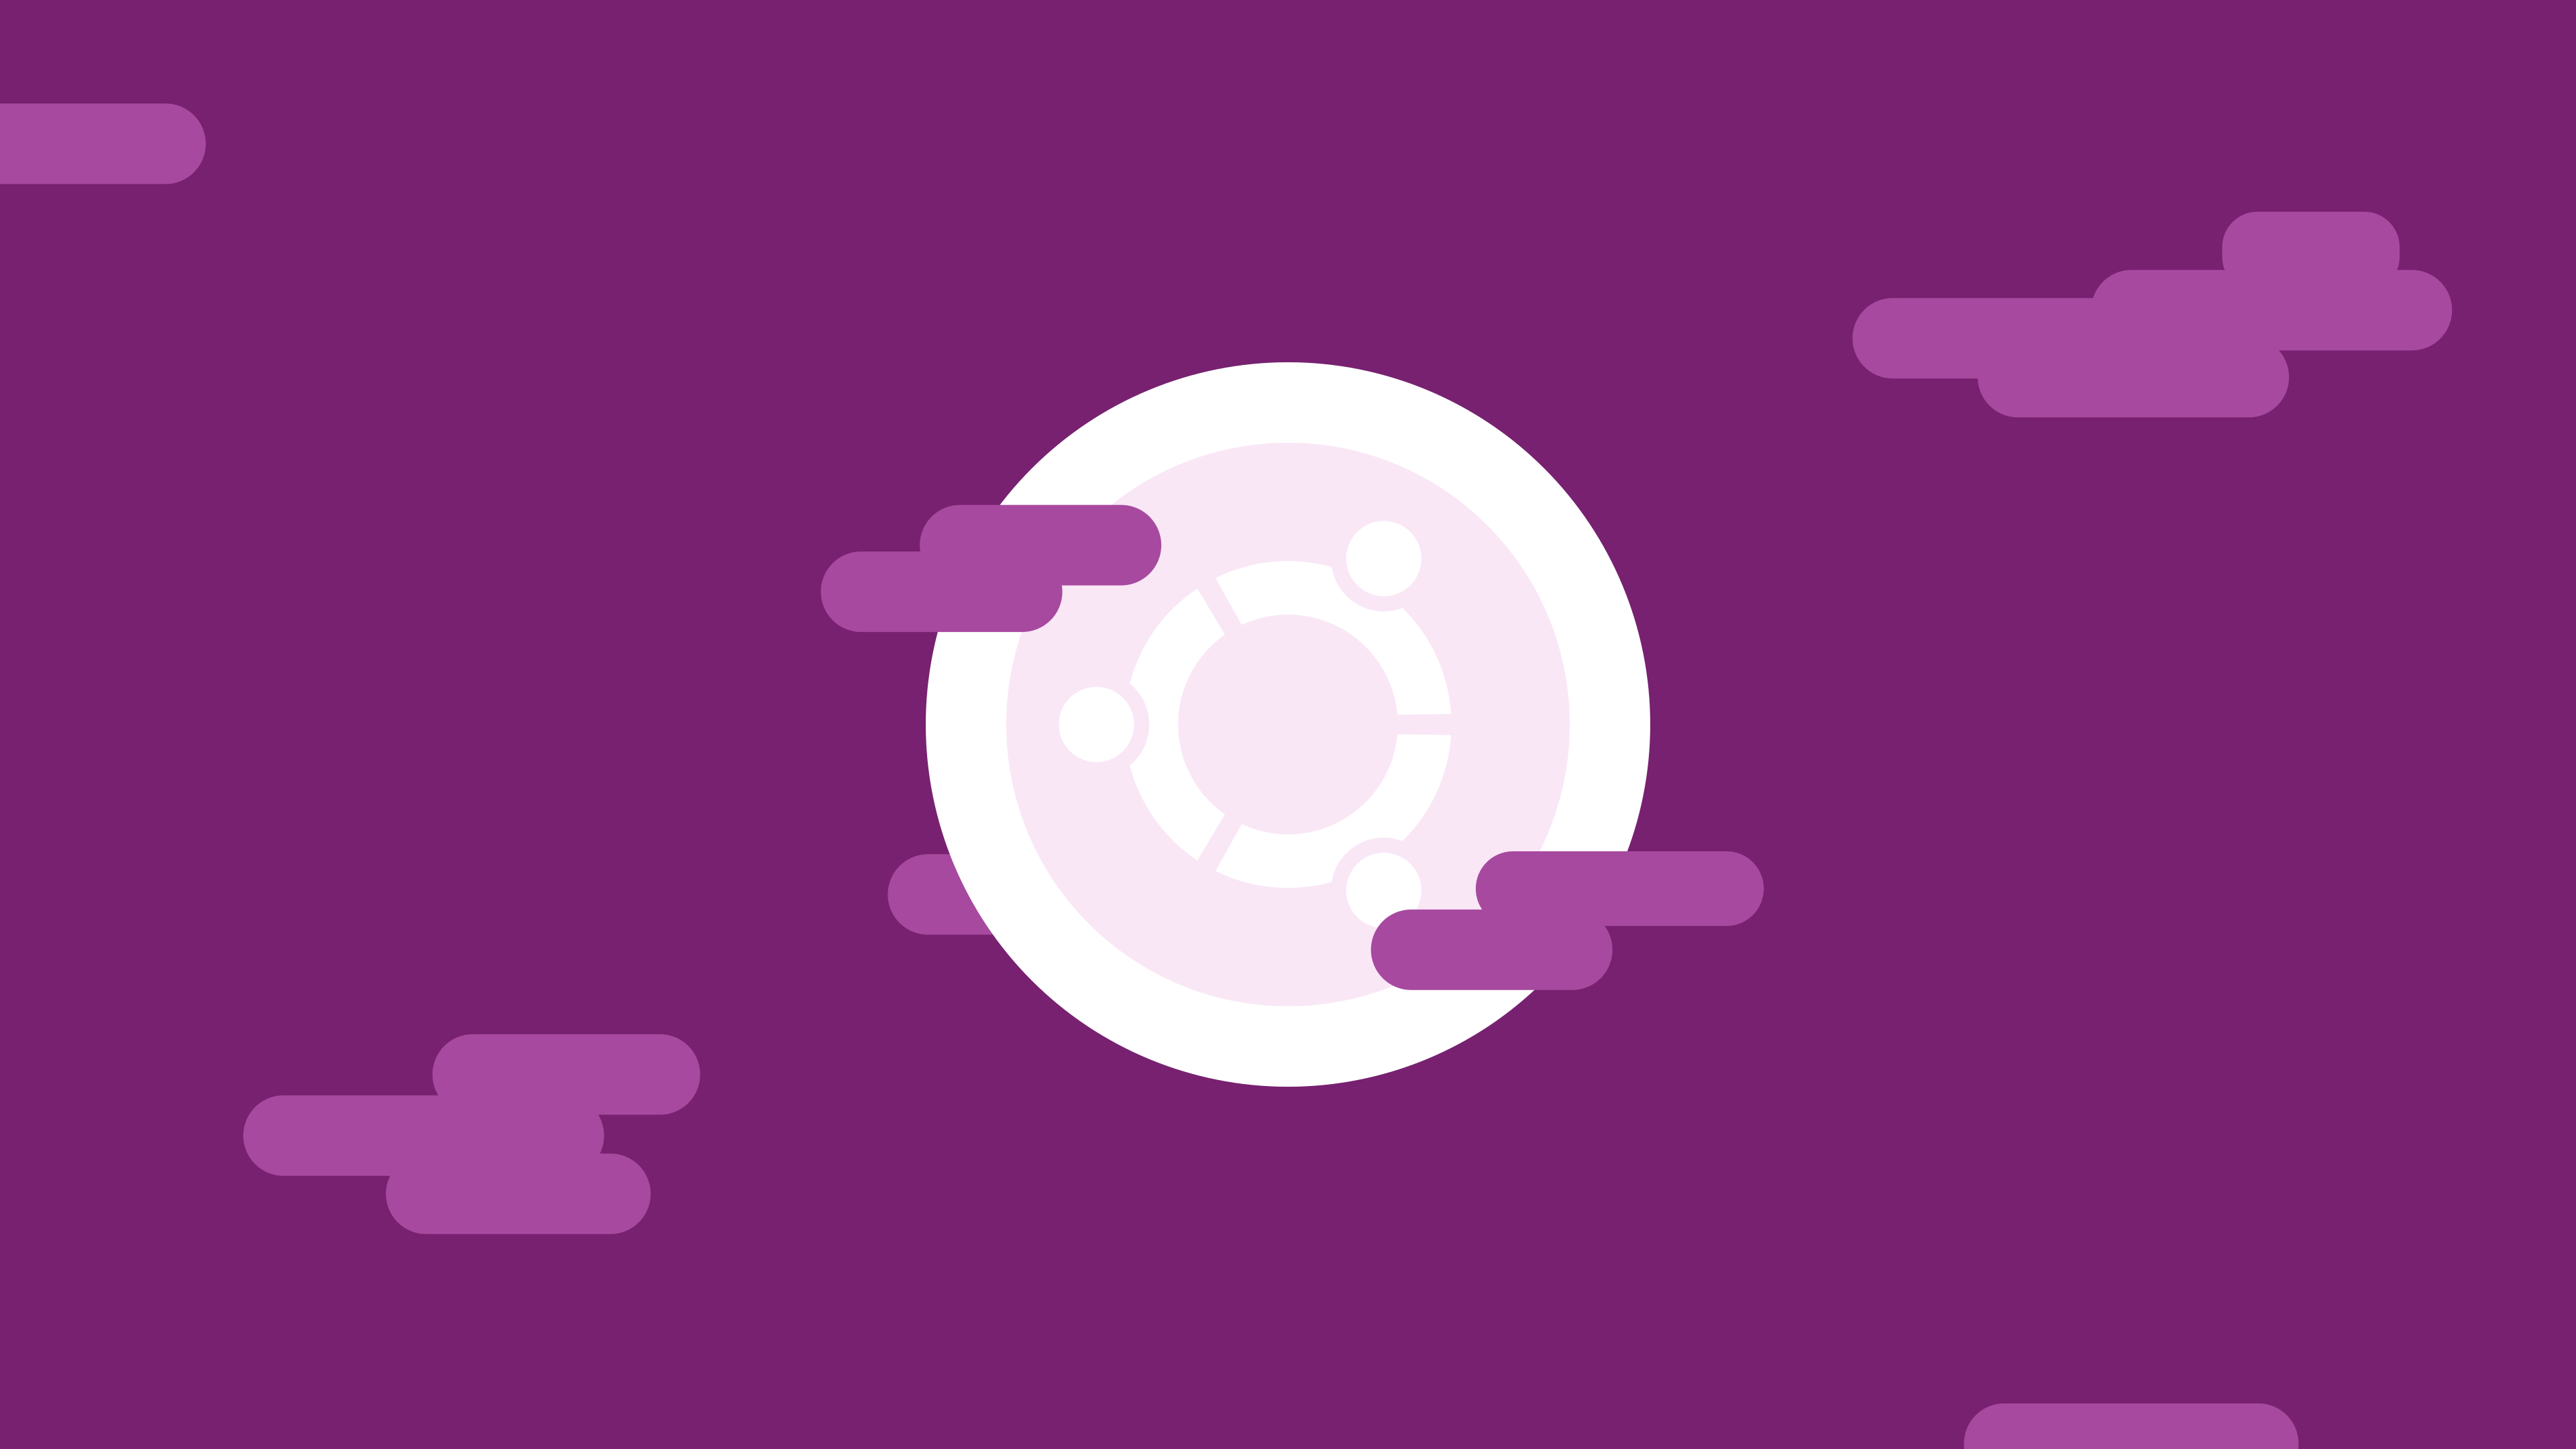 General 3840x2160 logo clouds Moon operating system Flatdesign minimalism vector purple Ubuntu digital art simple background